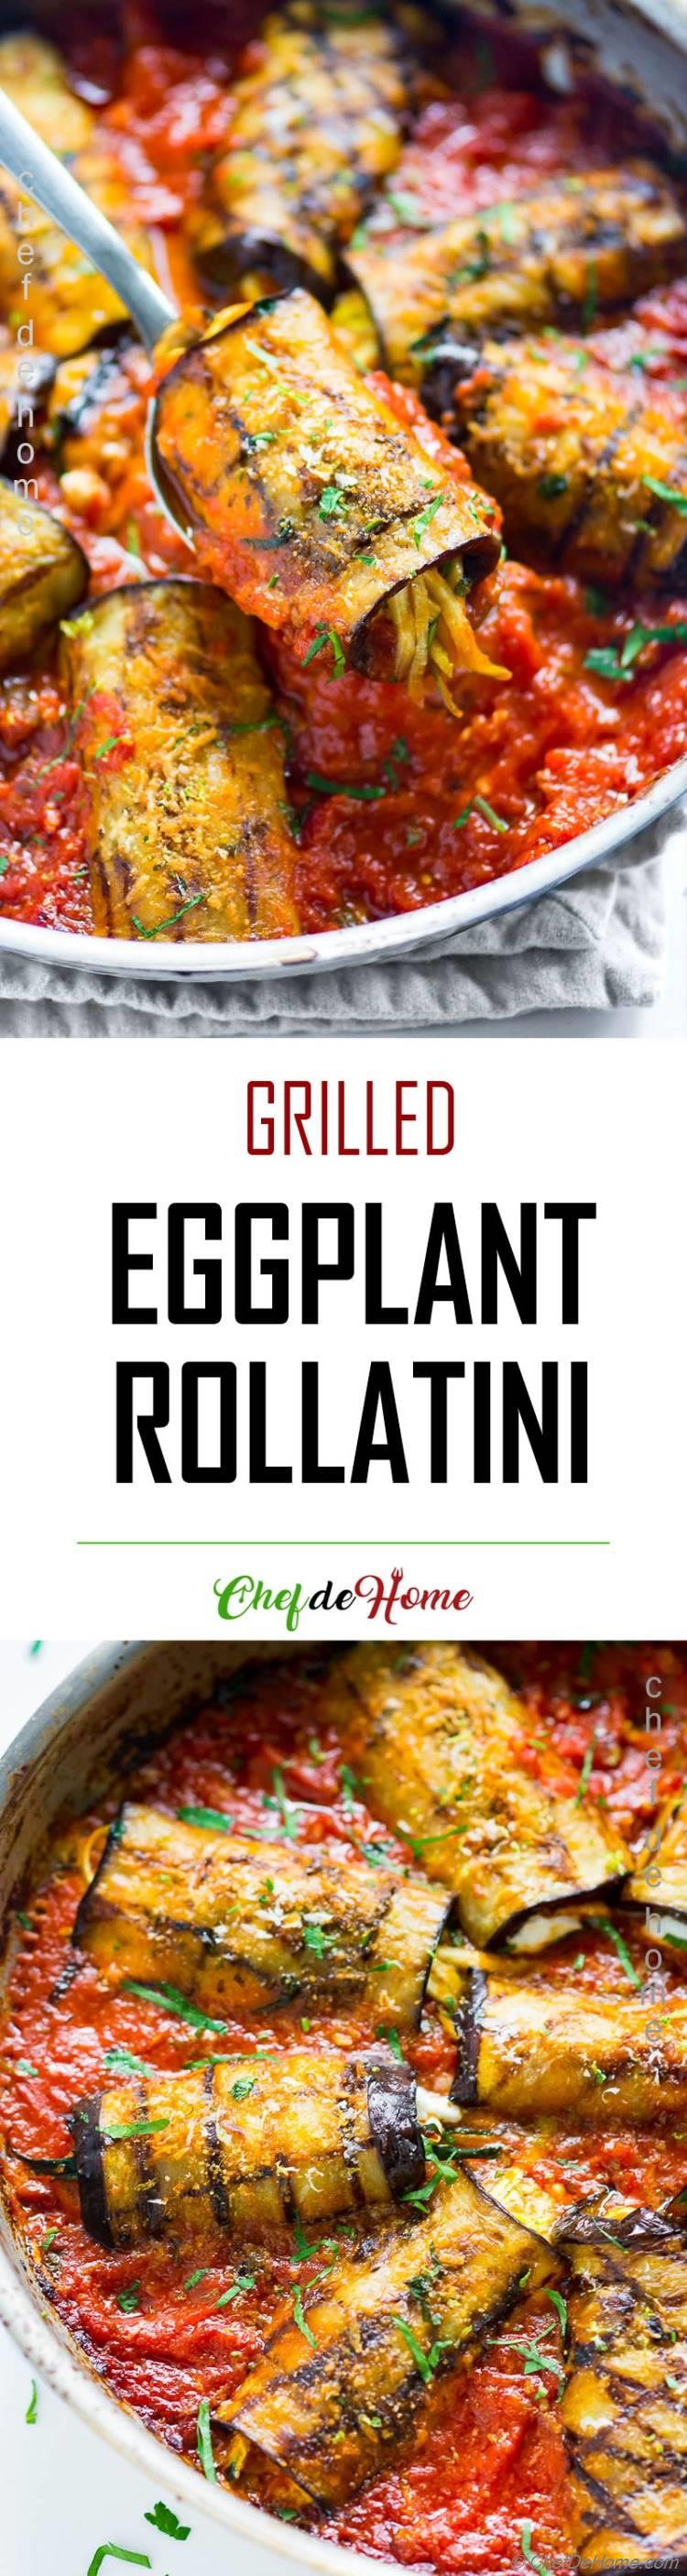 Easy eggplant rollatini recipe with garlic tomato sauce 